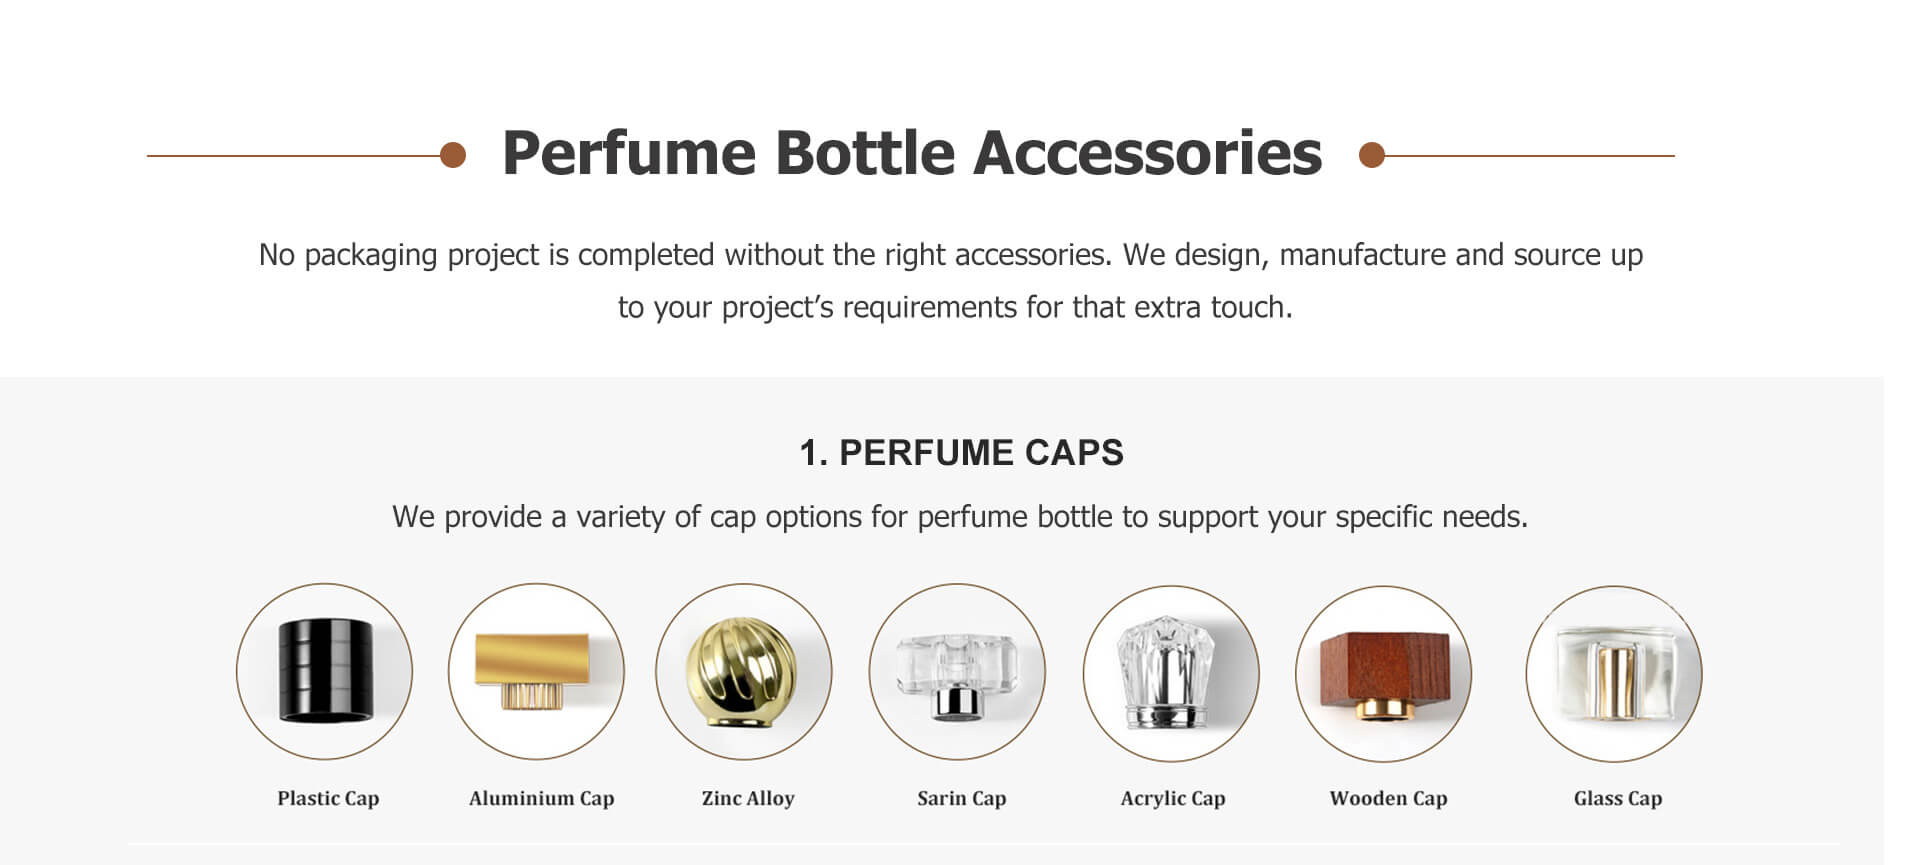 Perfume Bottle Accessories